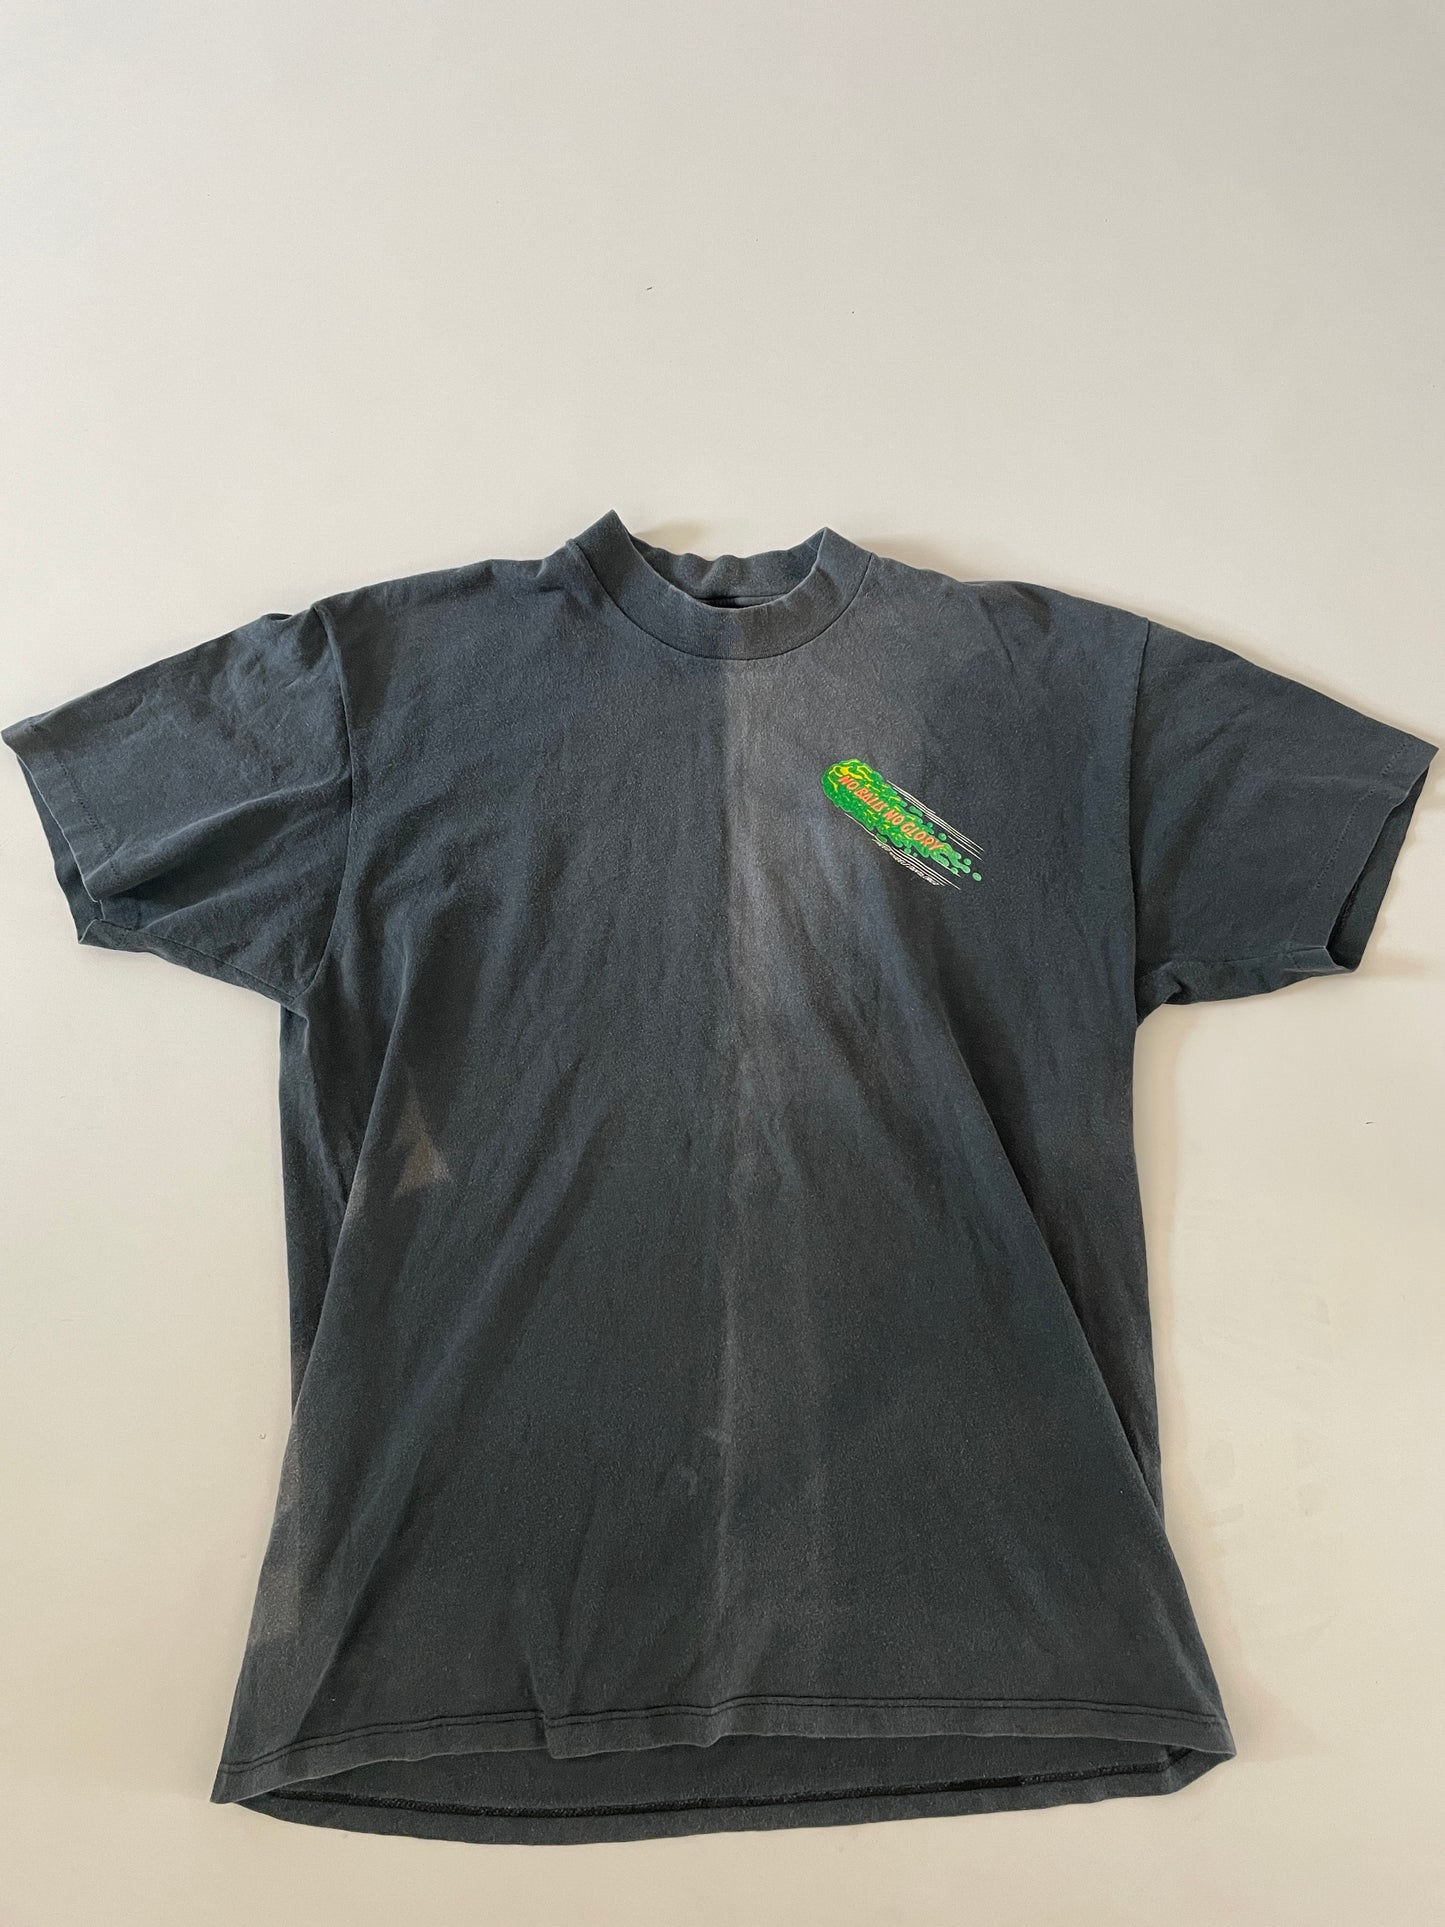 Santa Cruz 'Slime Balls' T-Shirt VINTAGE 80s